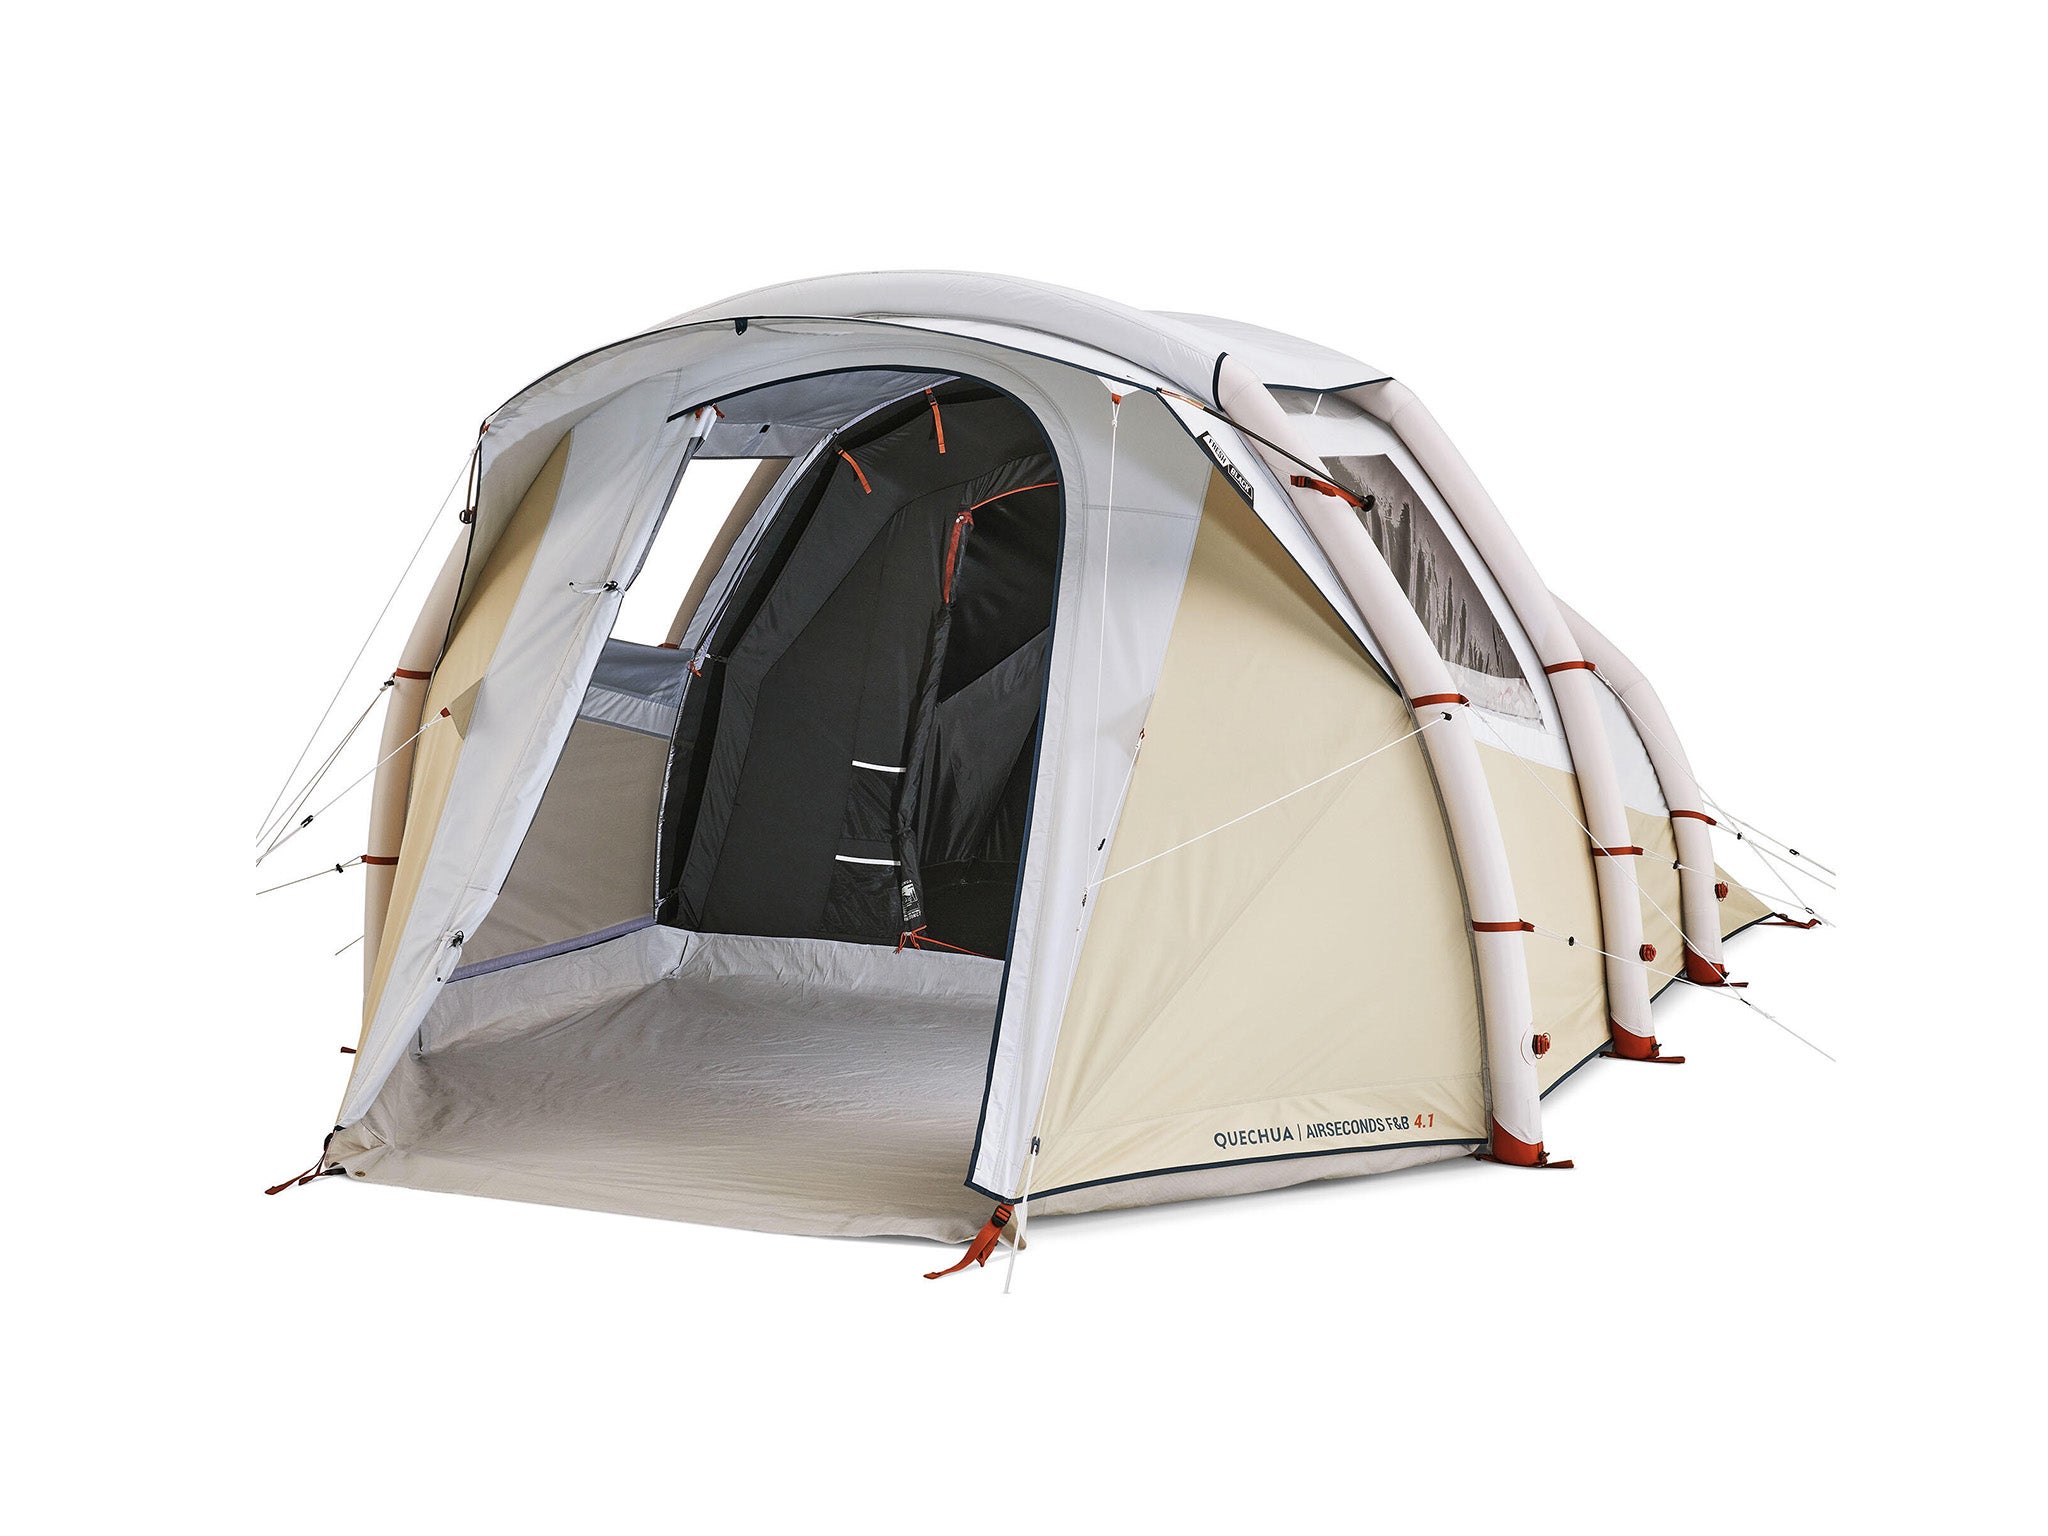 Quechua inflatable camping tent air seconds 4.1